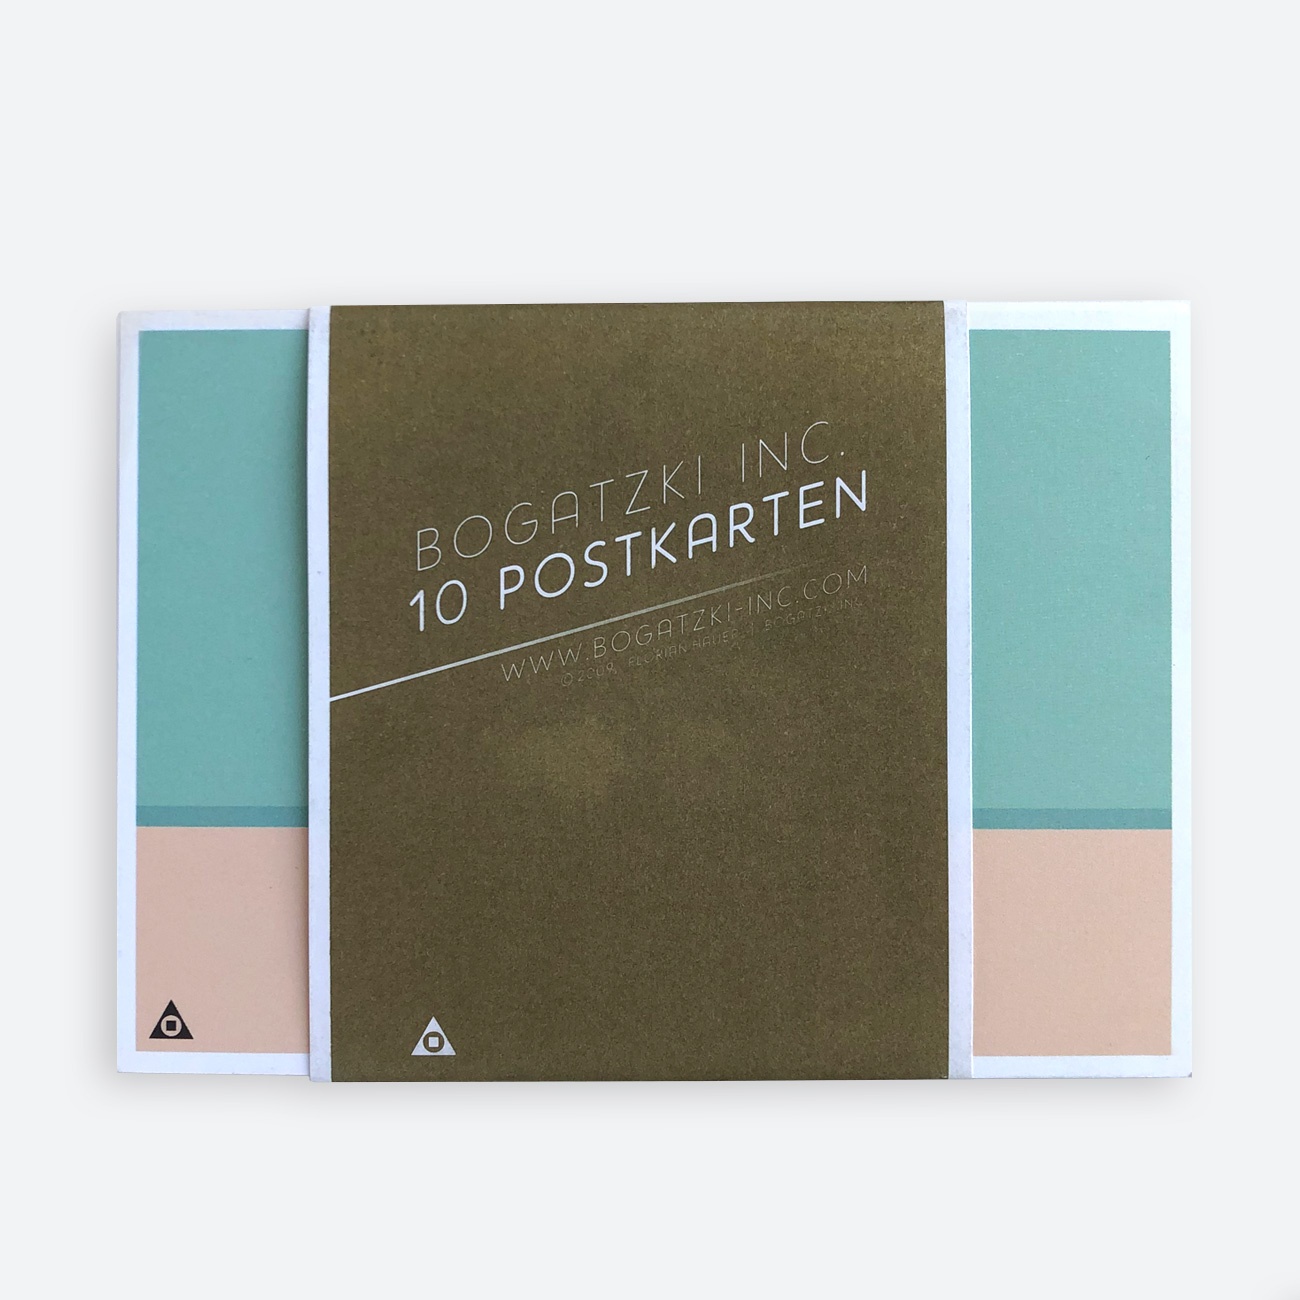 Bogatzki Inc., Postkarten Set, 10 Karten, illustriert,